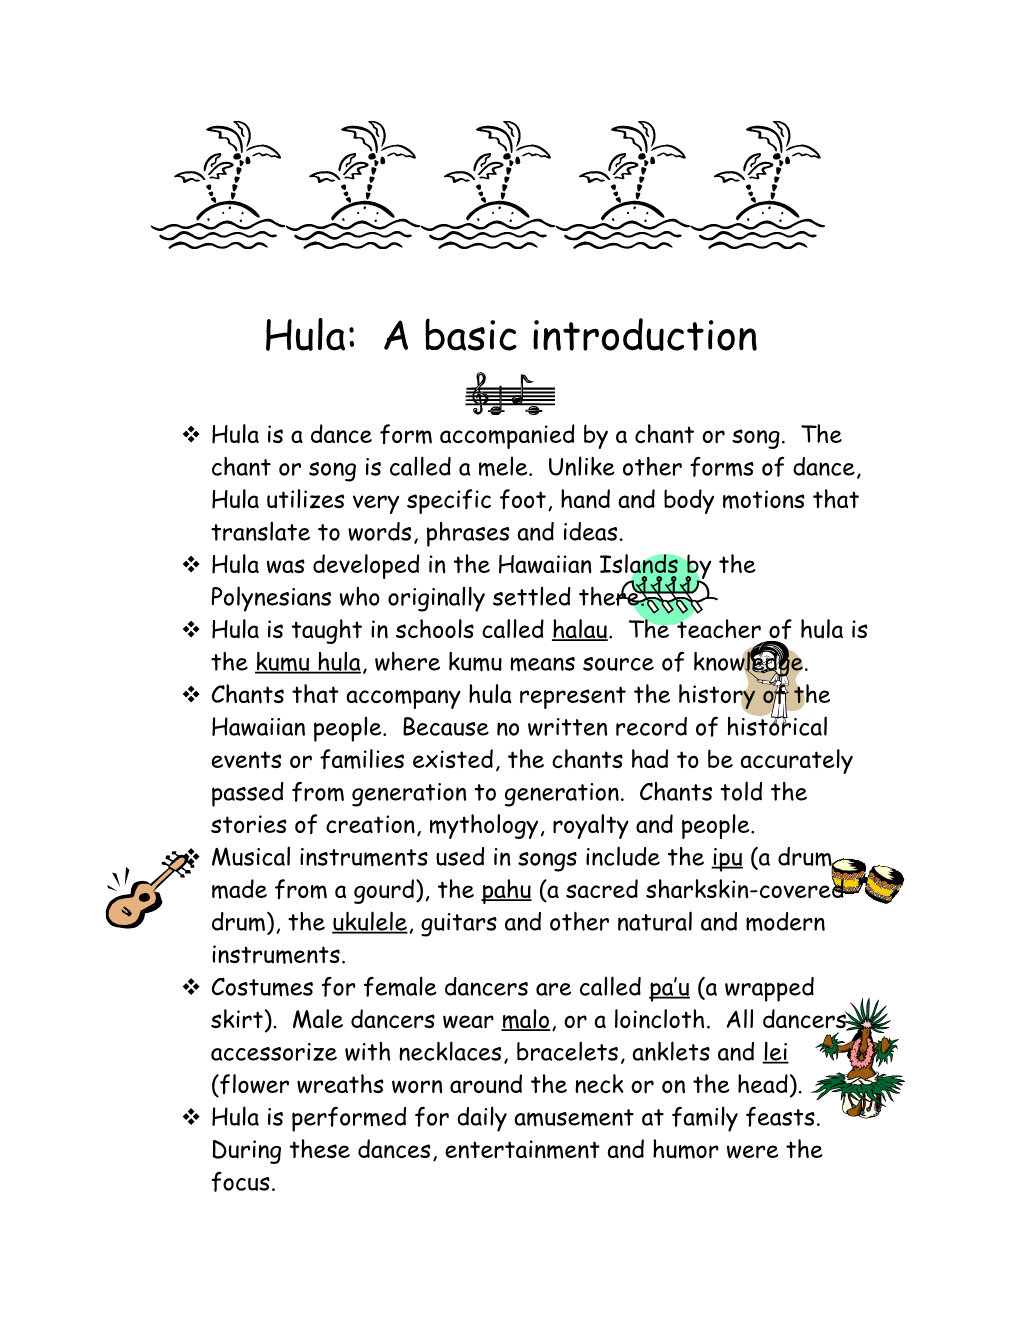 Hula: a Basic Introduction